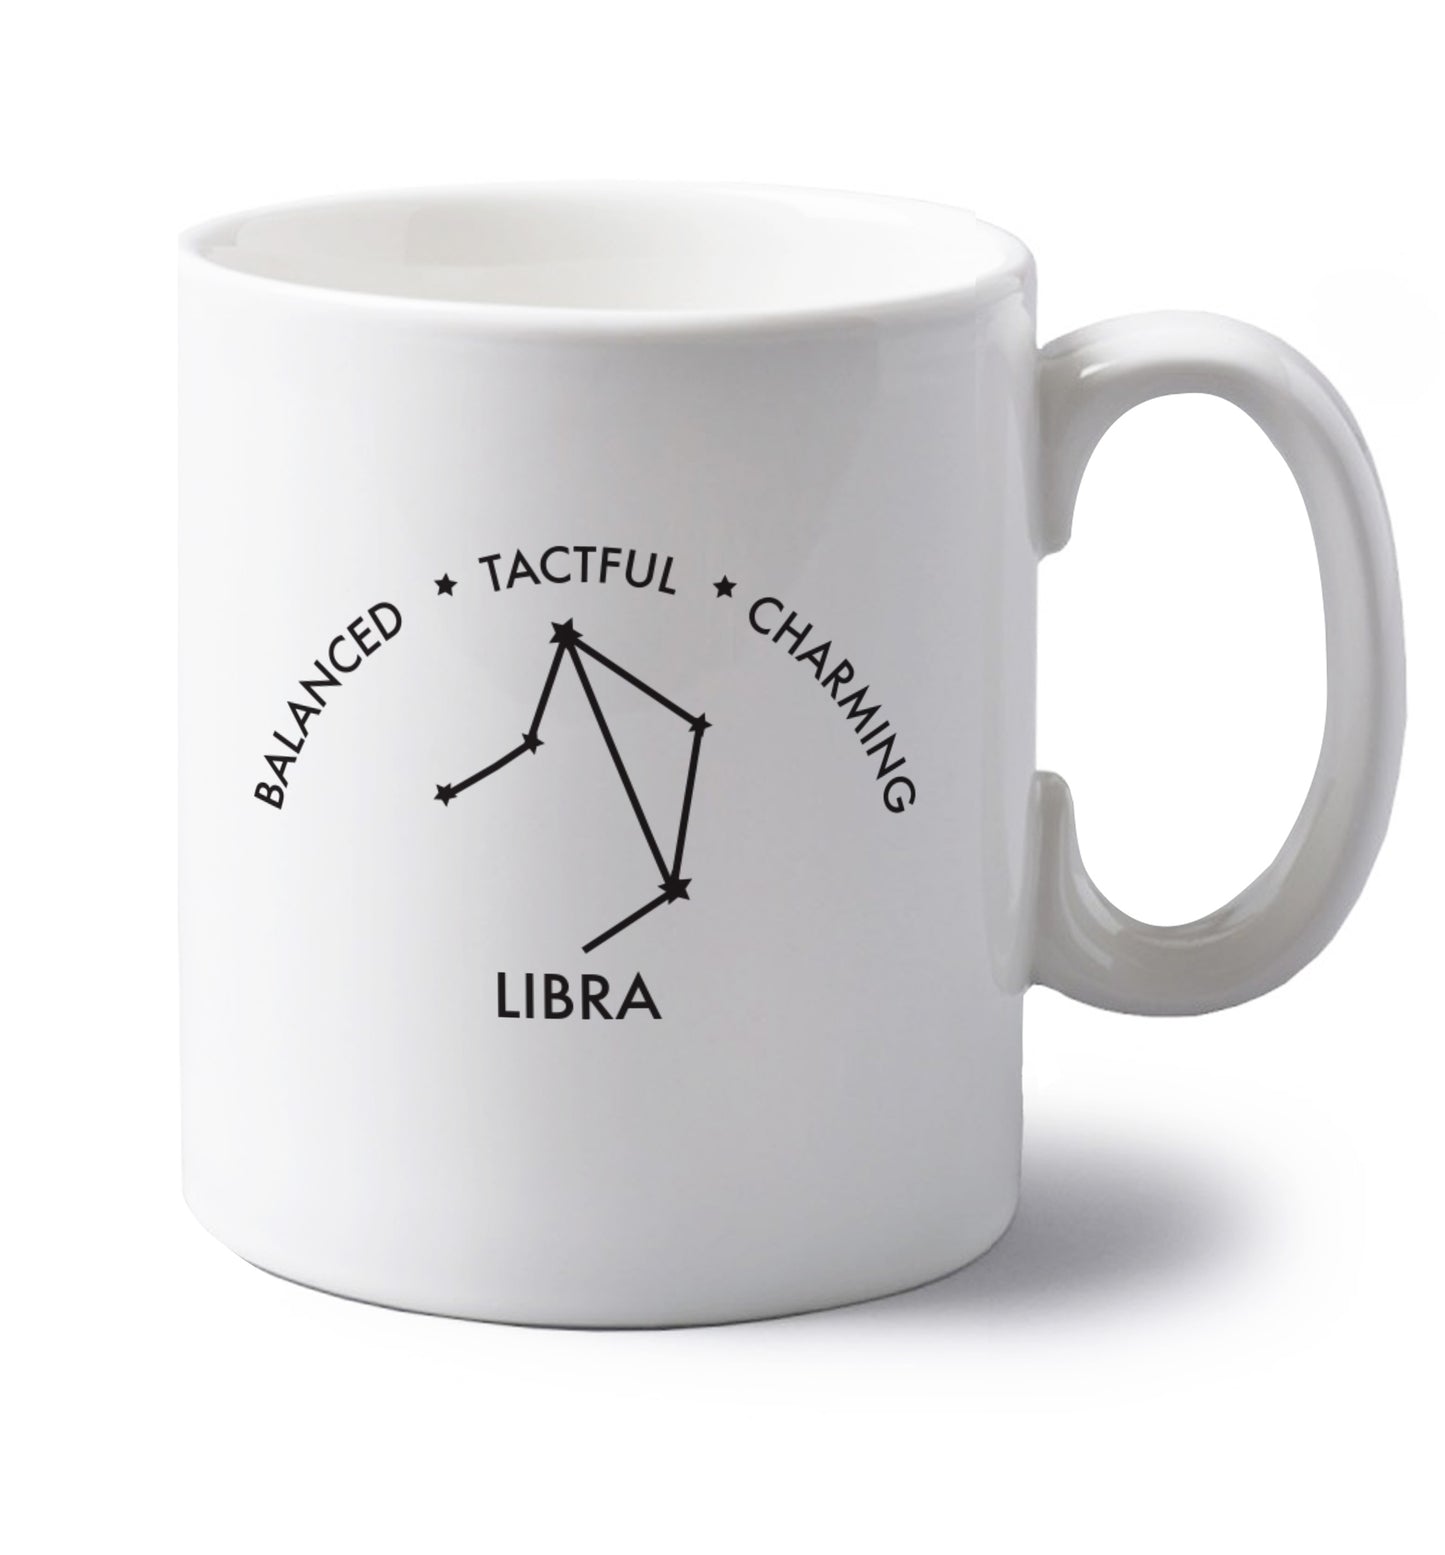 Libra: Balanced, Tactful, Charming left handed white ceramic mug 